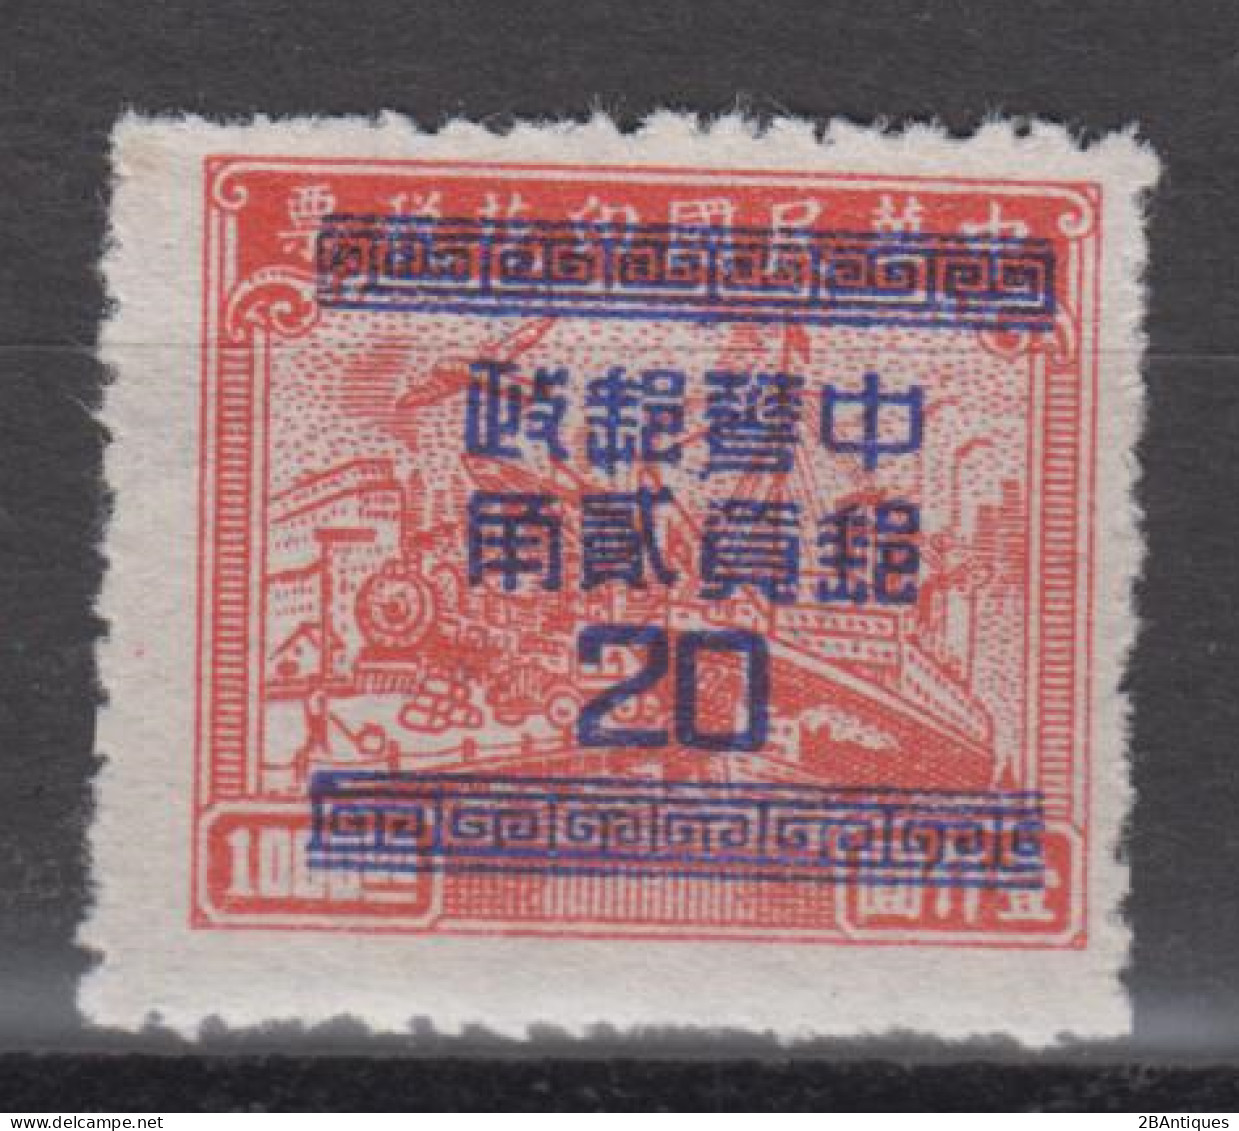 CHINA 1949 - Silver Yuan Surcharge 20c On $1000 MNH** NGAI - 1912-1949 Republic